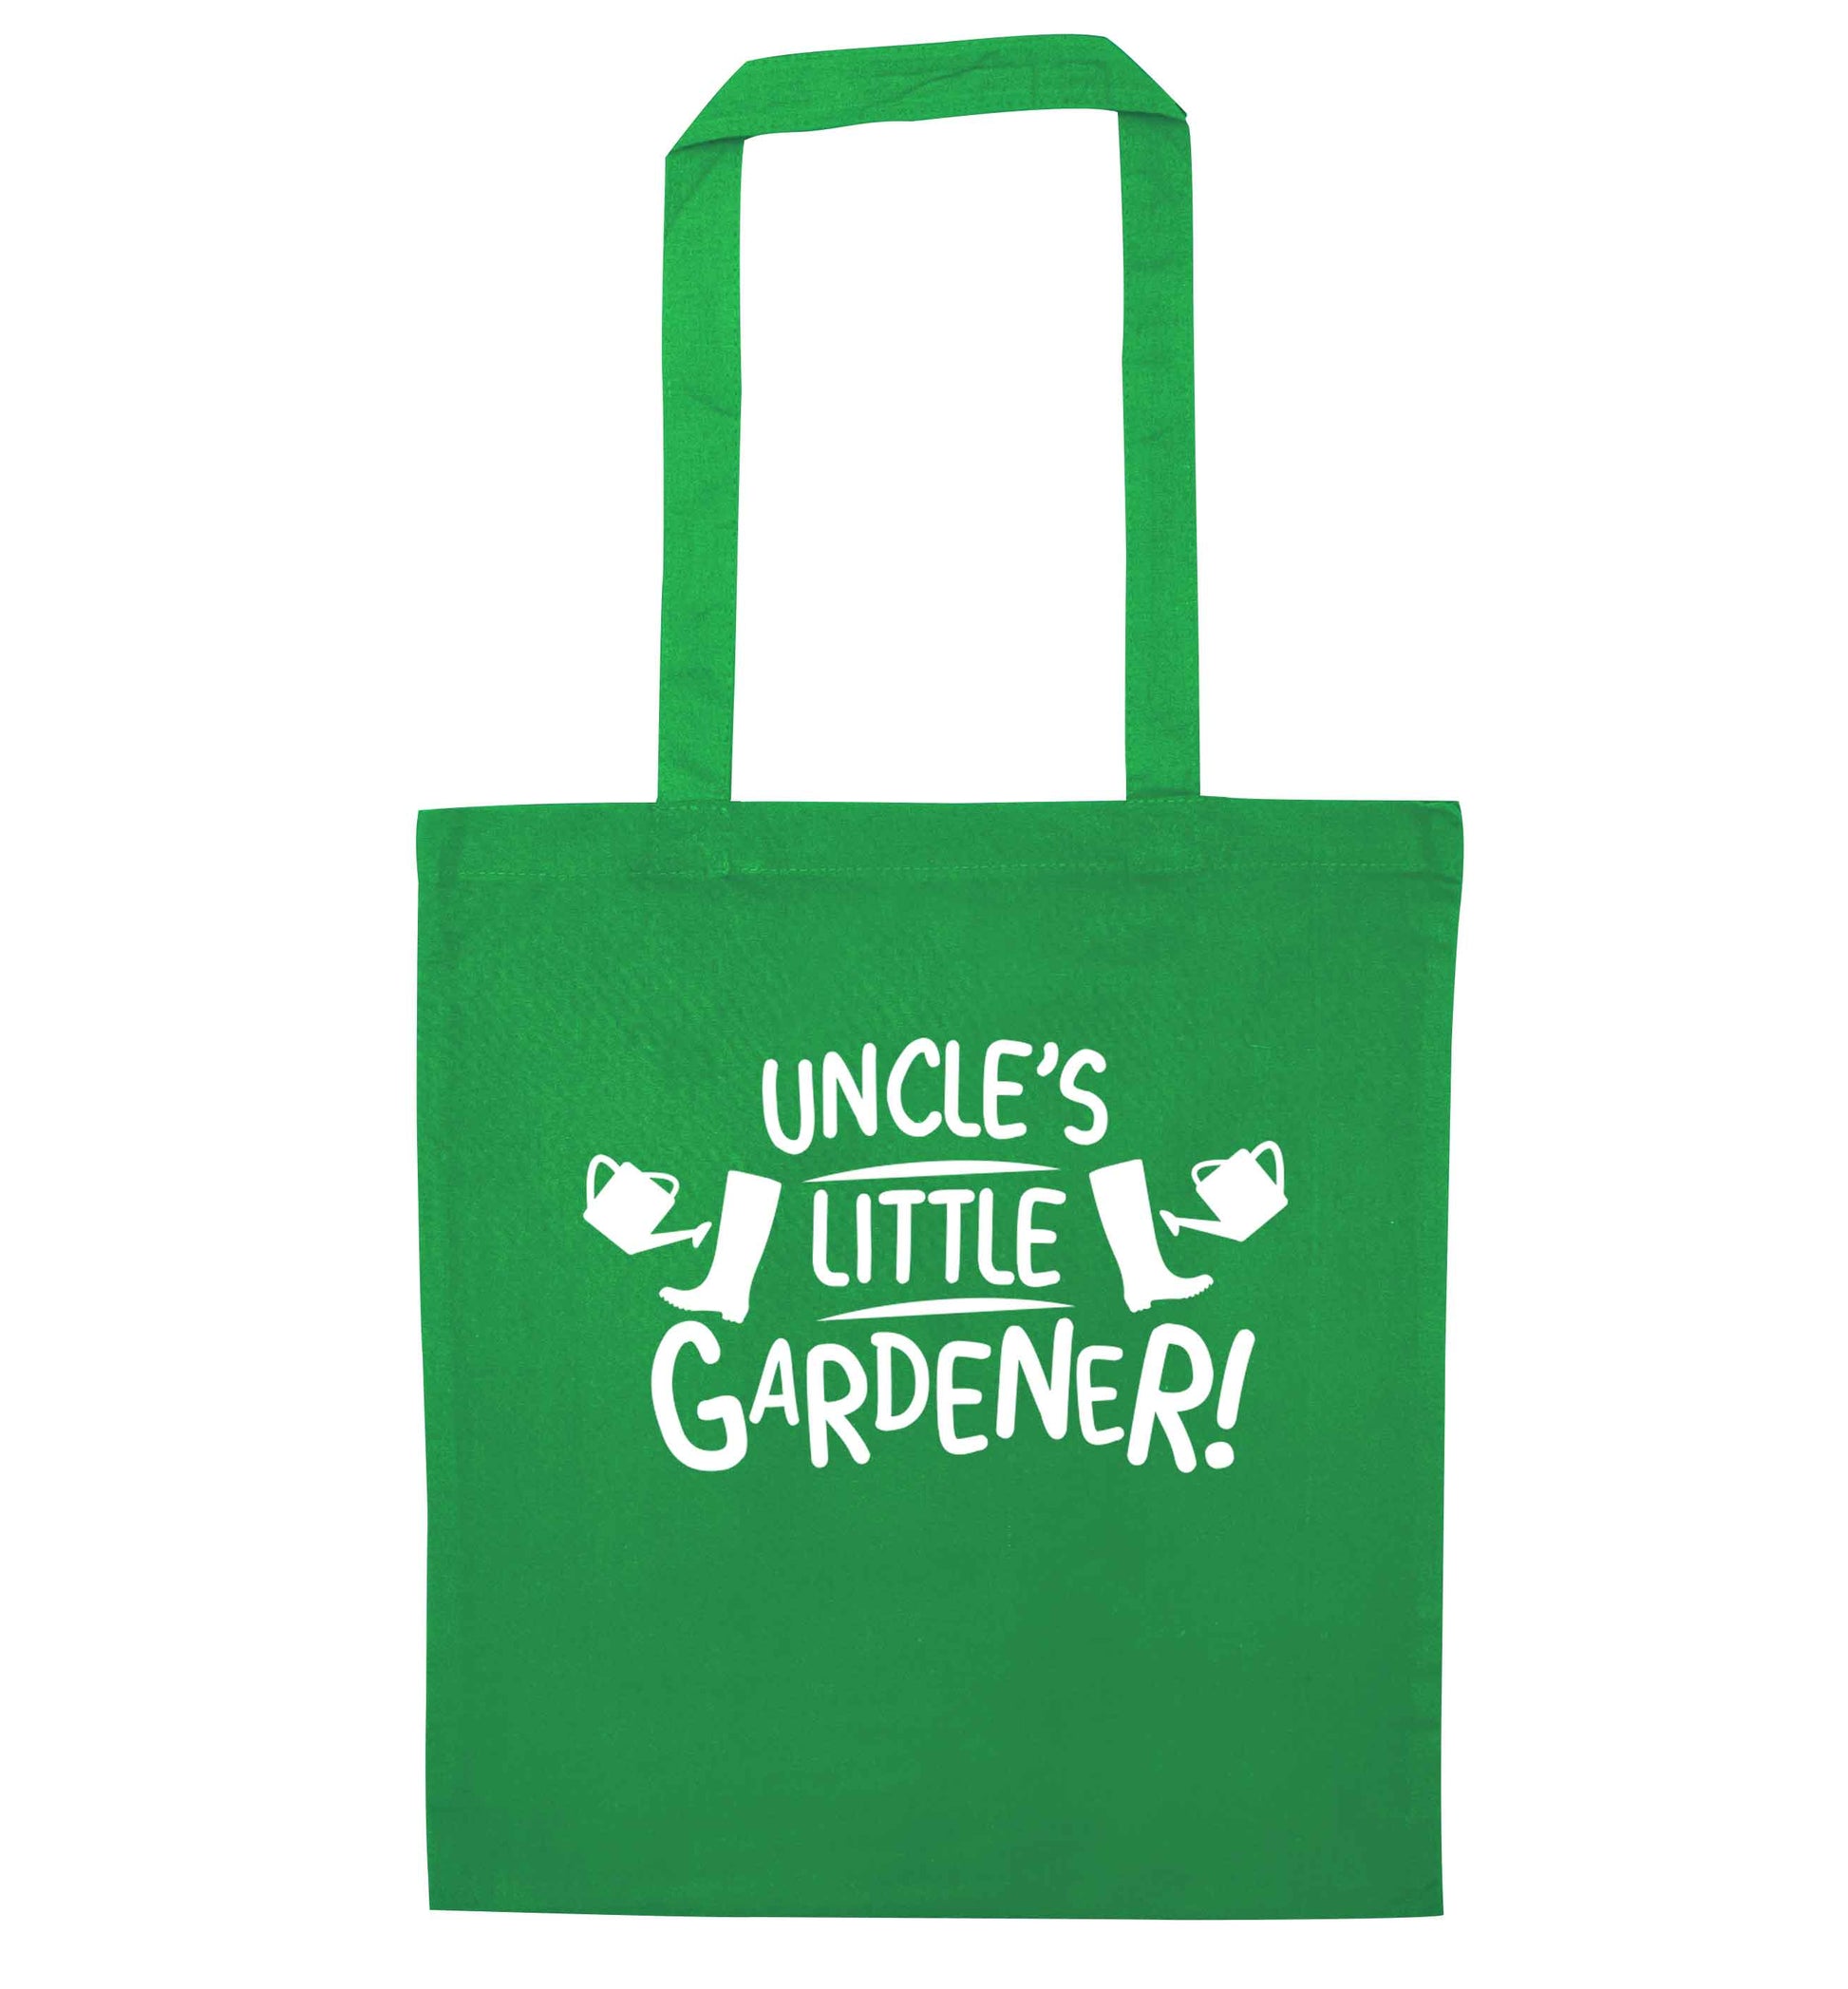 Uncle's little gardener green tote bag